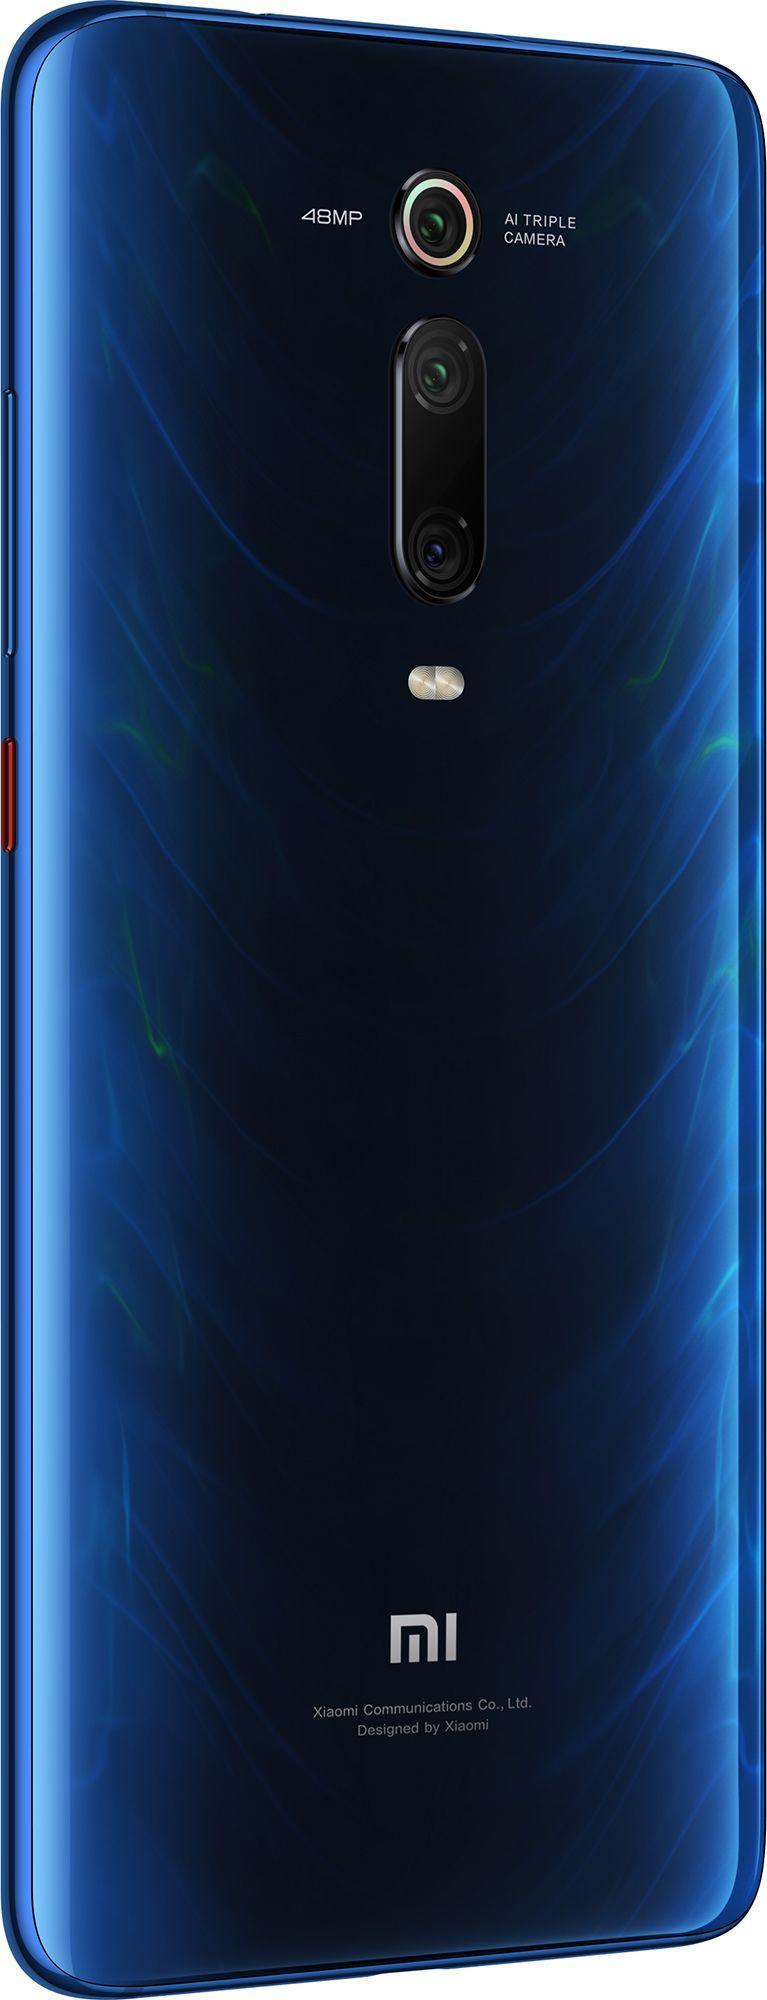 Купить Смартфон Xiaomi Mi 9T (Redmi K20) 6/128Gb Glacier Blue